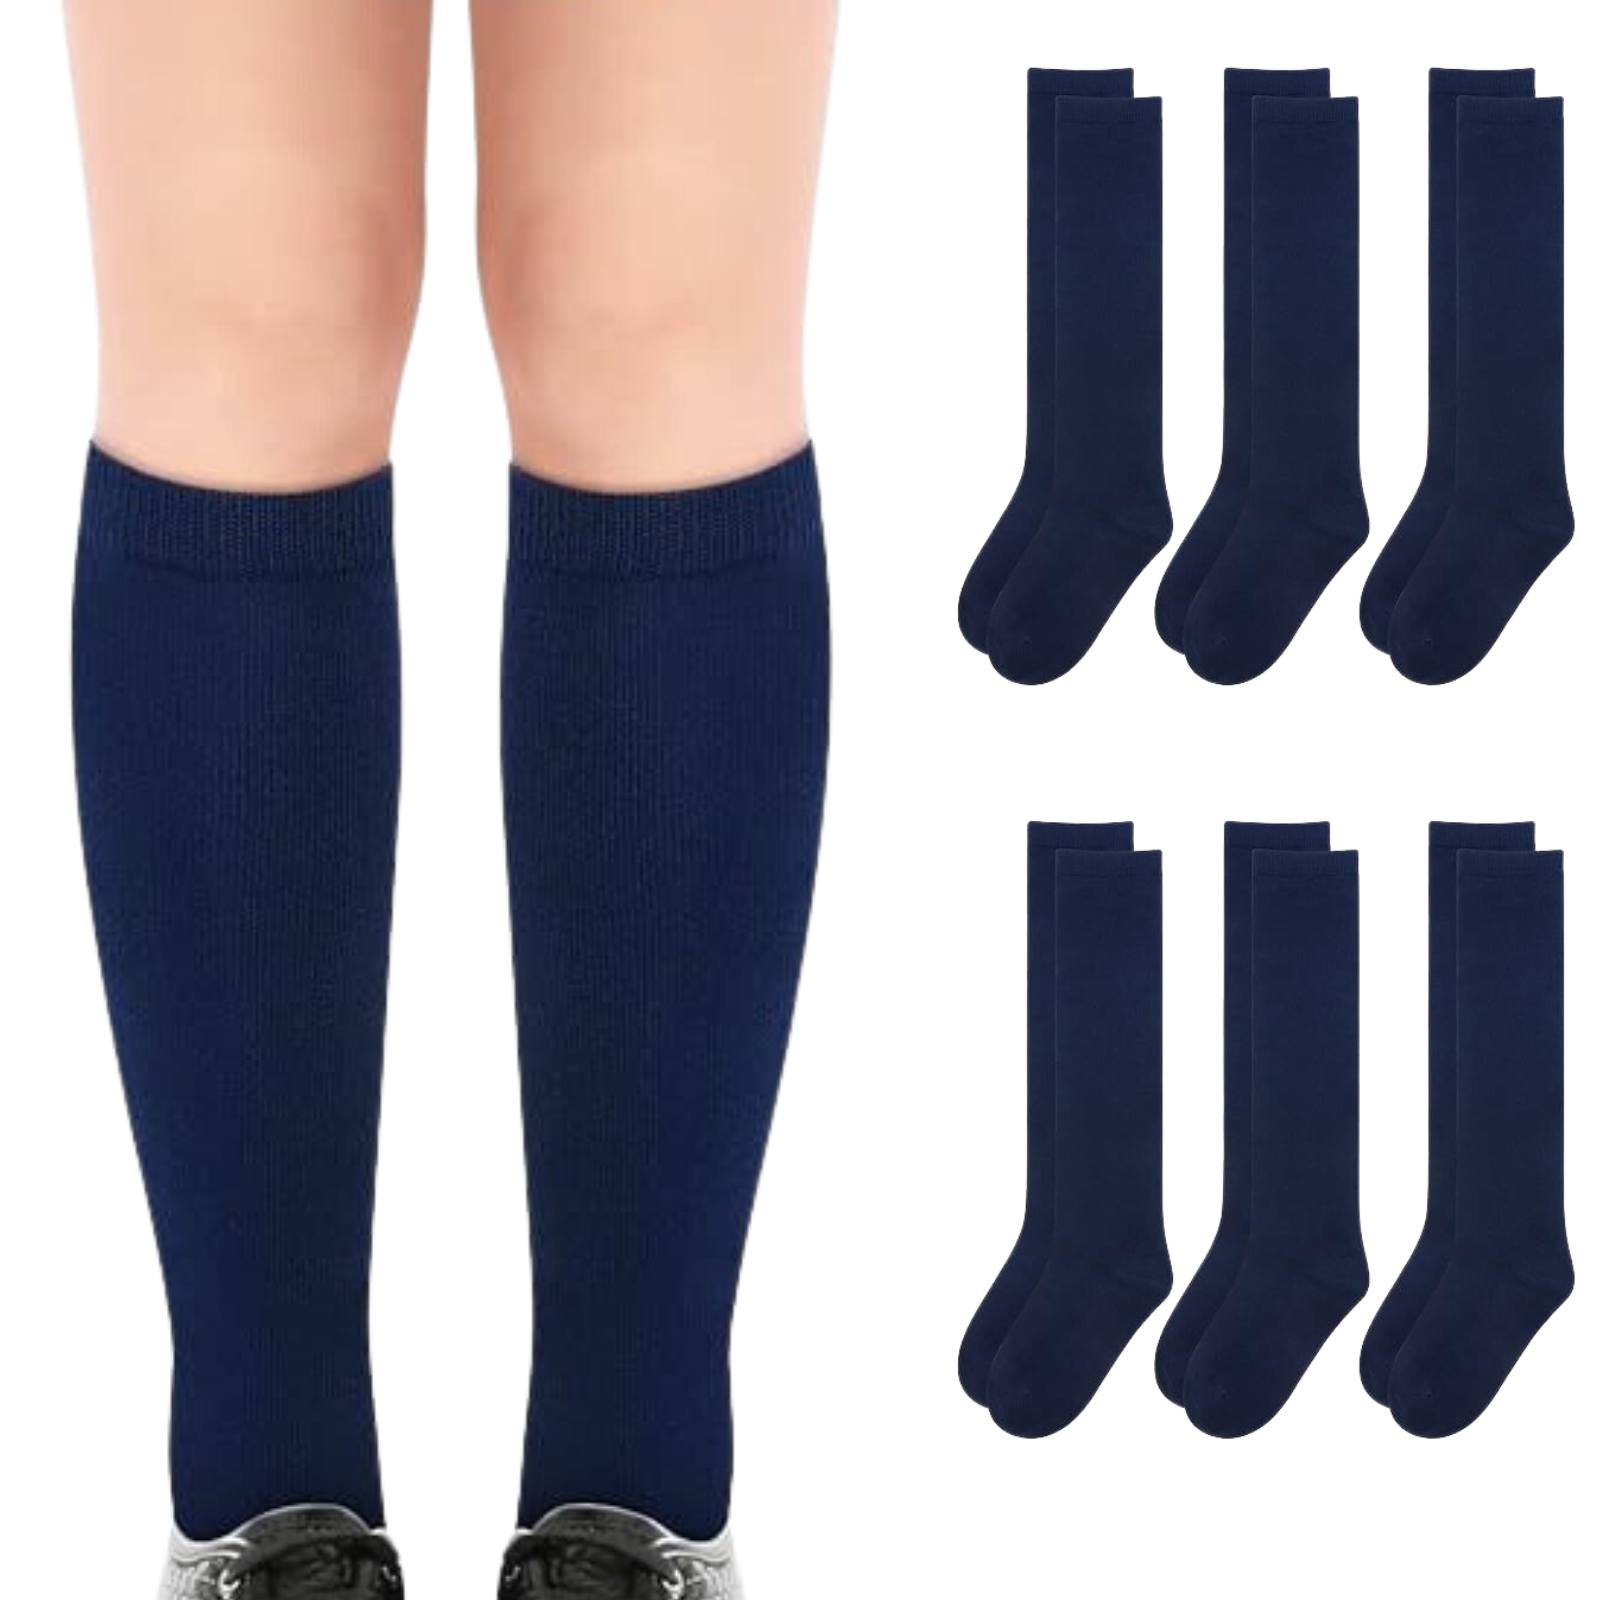 6x Pairs School Uniform Knee High Socks Cotton Rich Girls Boys Kids Bulk - Navy - 13-3 (8-10 Years Old)